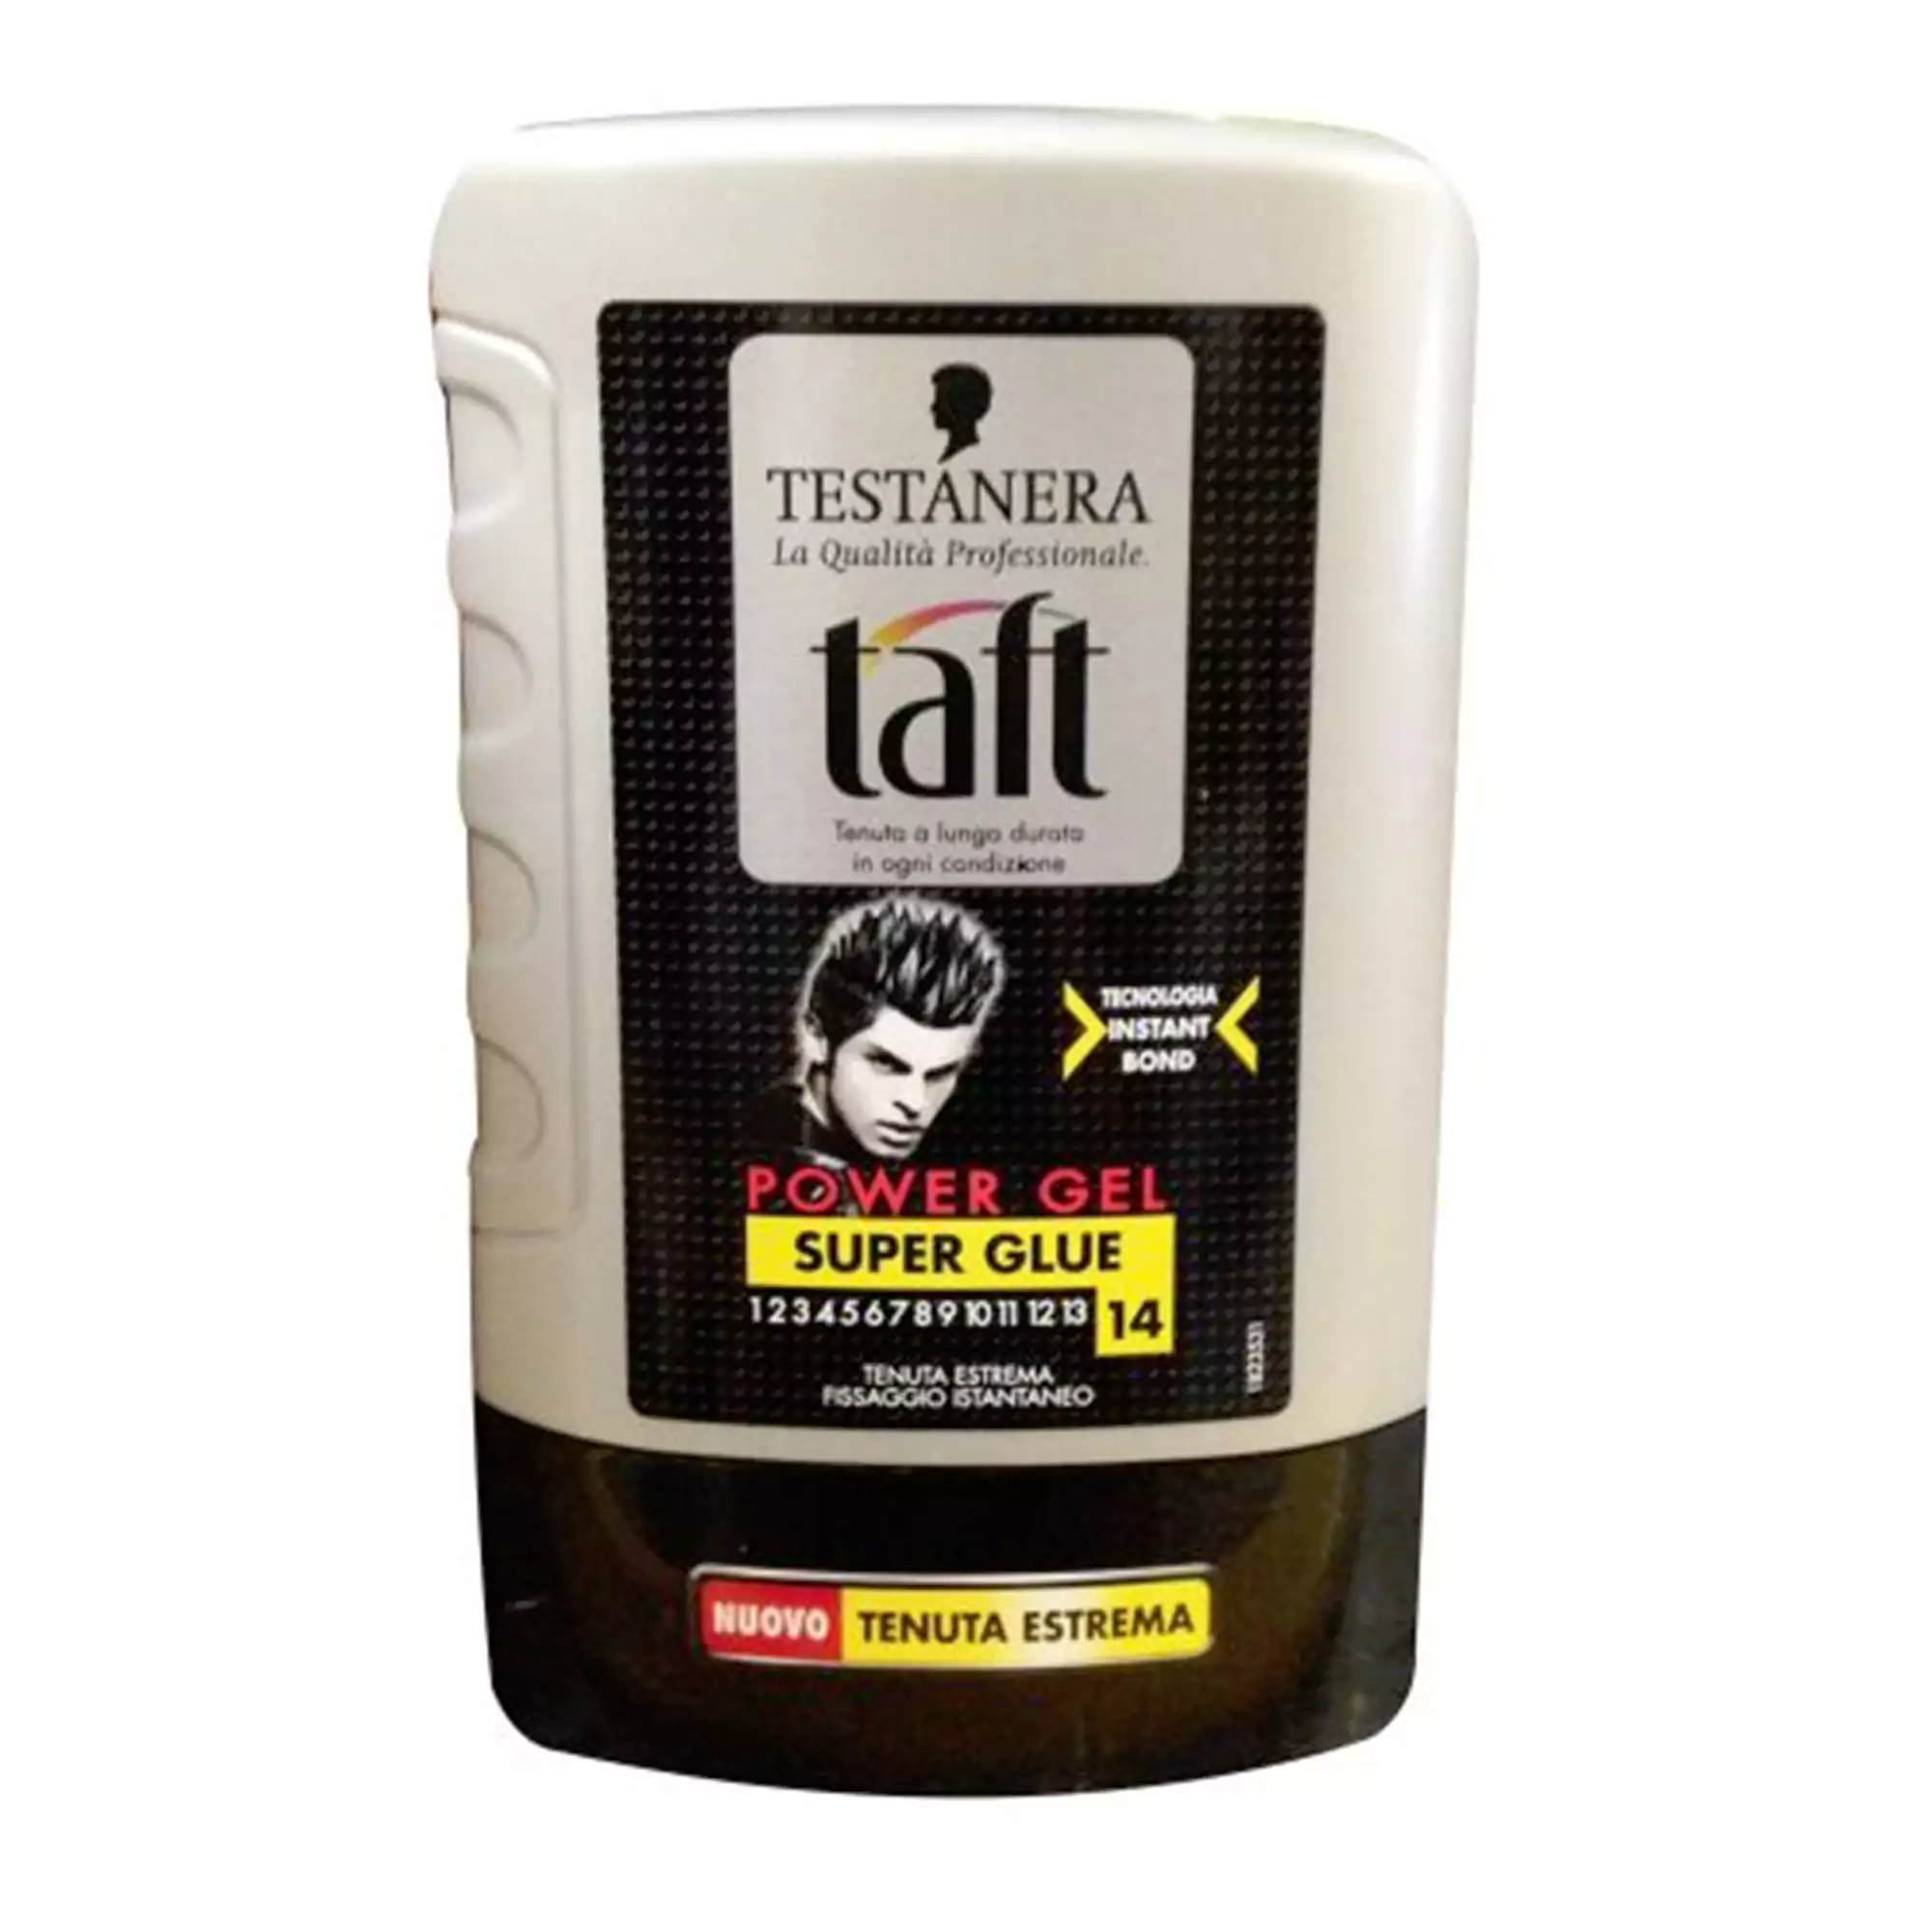 Taft Gel Μαλλιών Super Glue No 14 300ml - Femme Fatale - Taft Gel Μαλλιών Super Glue No 14 300ml